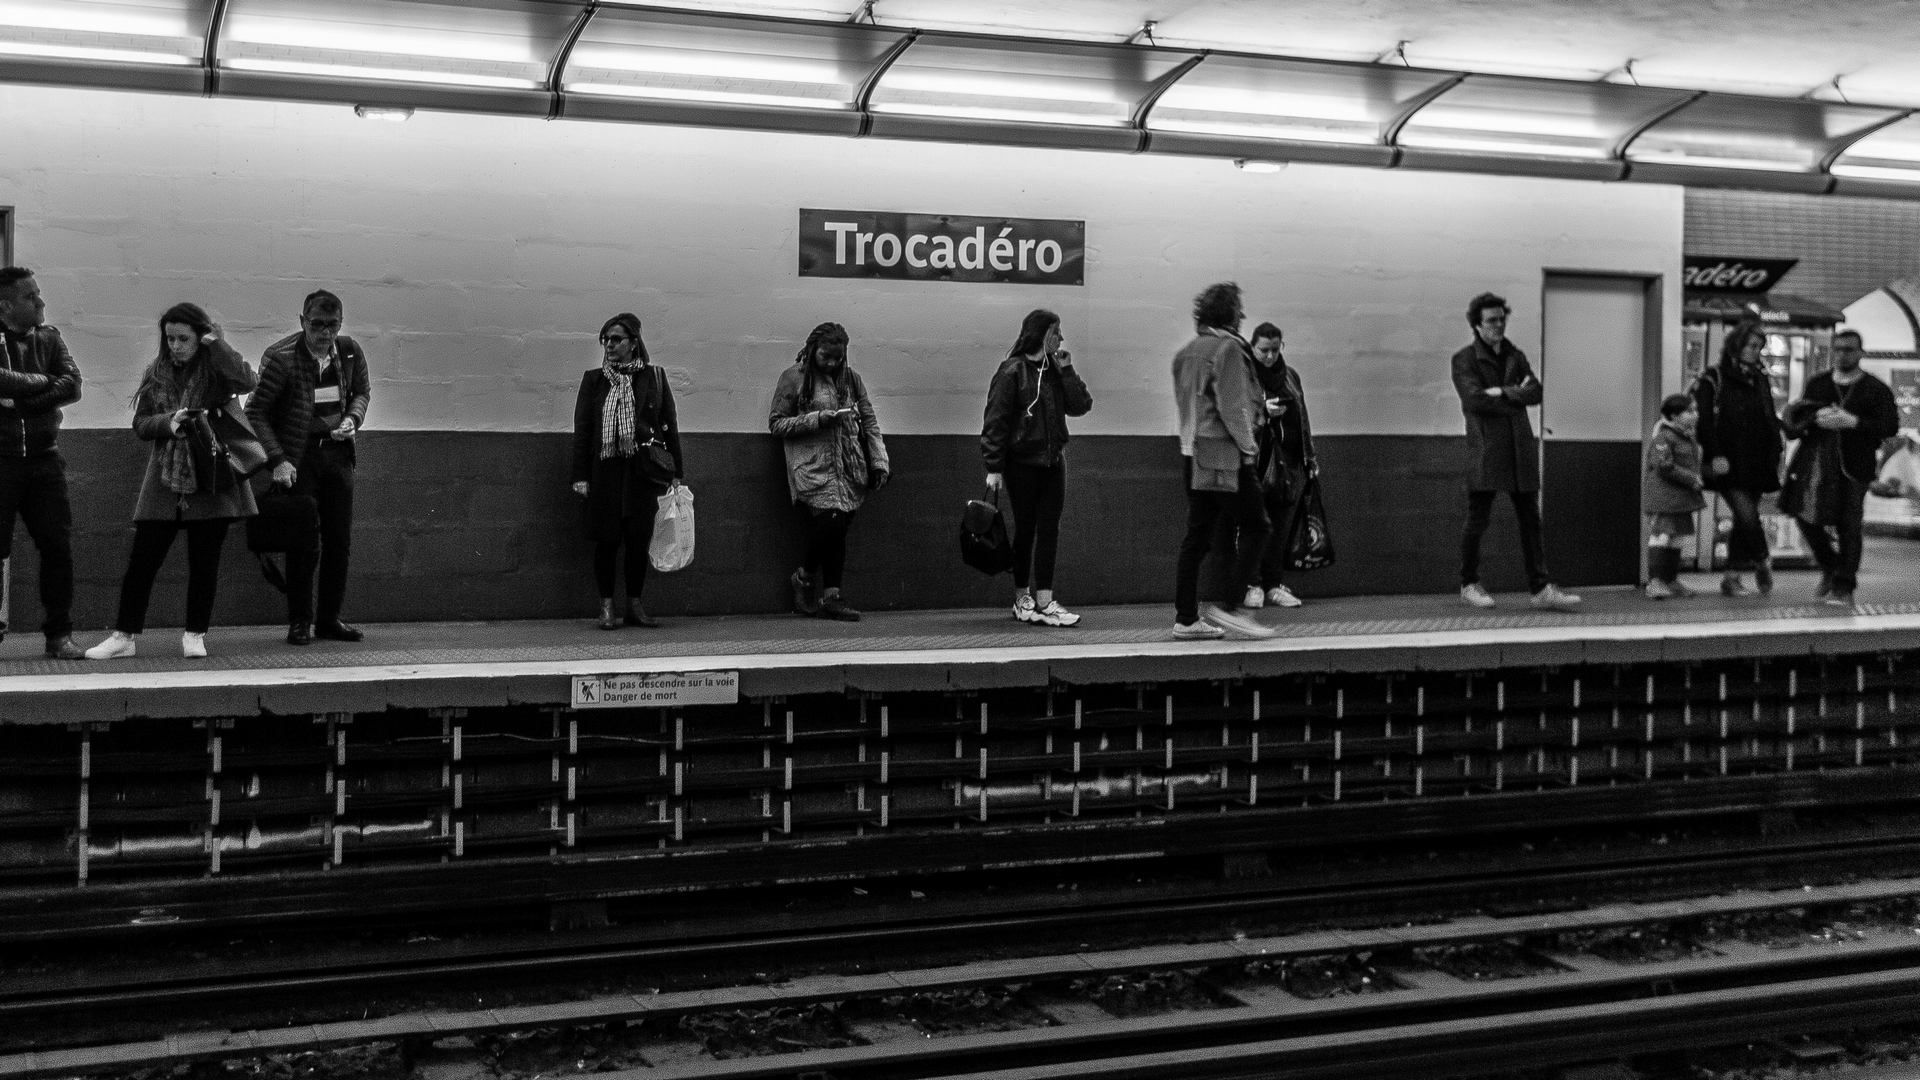 Metrostation Trocadero